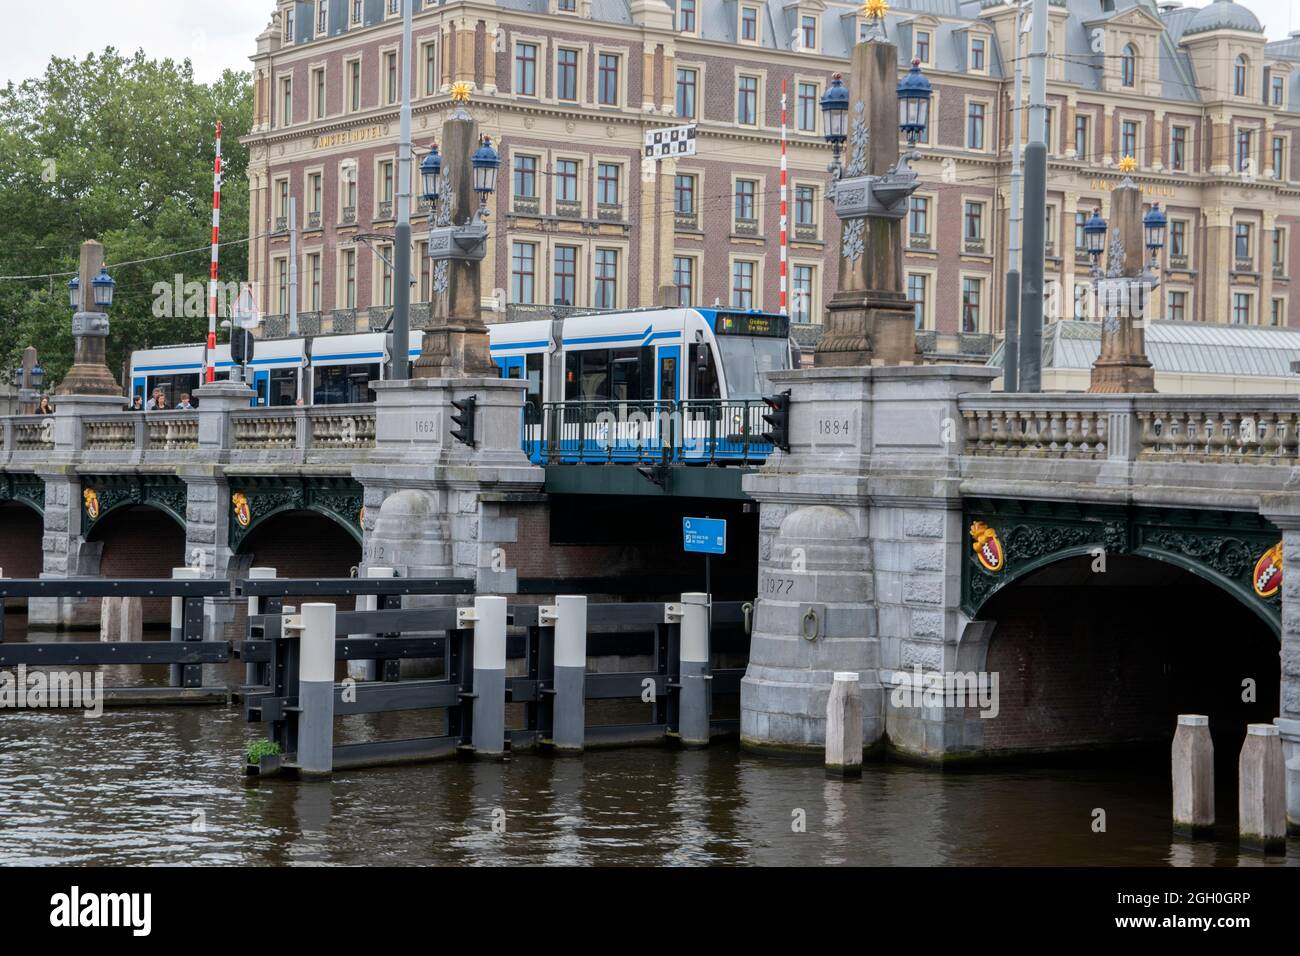 Tram On The Torontobrug Bridge At Amsterdam The Netherlands 2-9-2021 Stock Photo